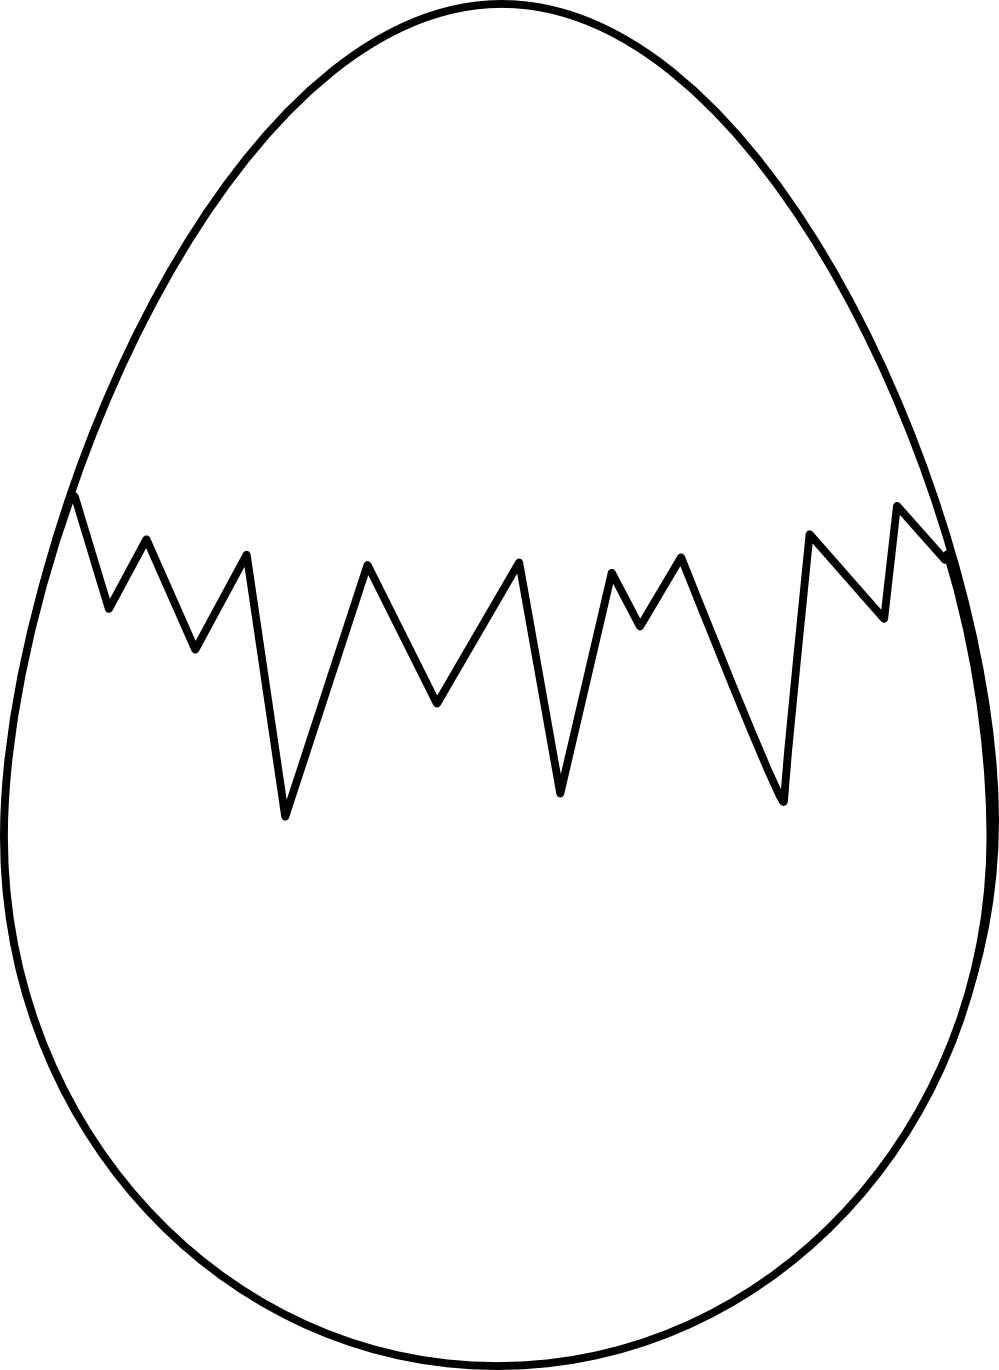 Egg clipart template.